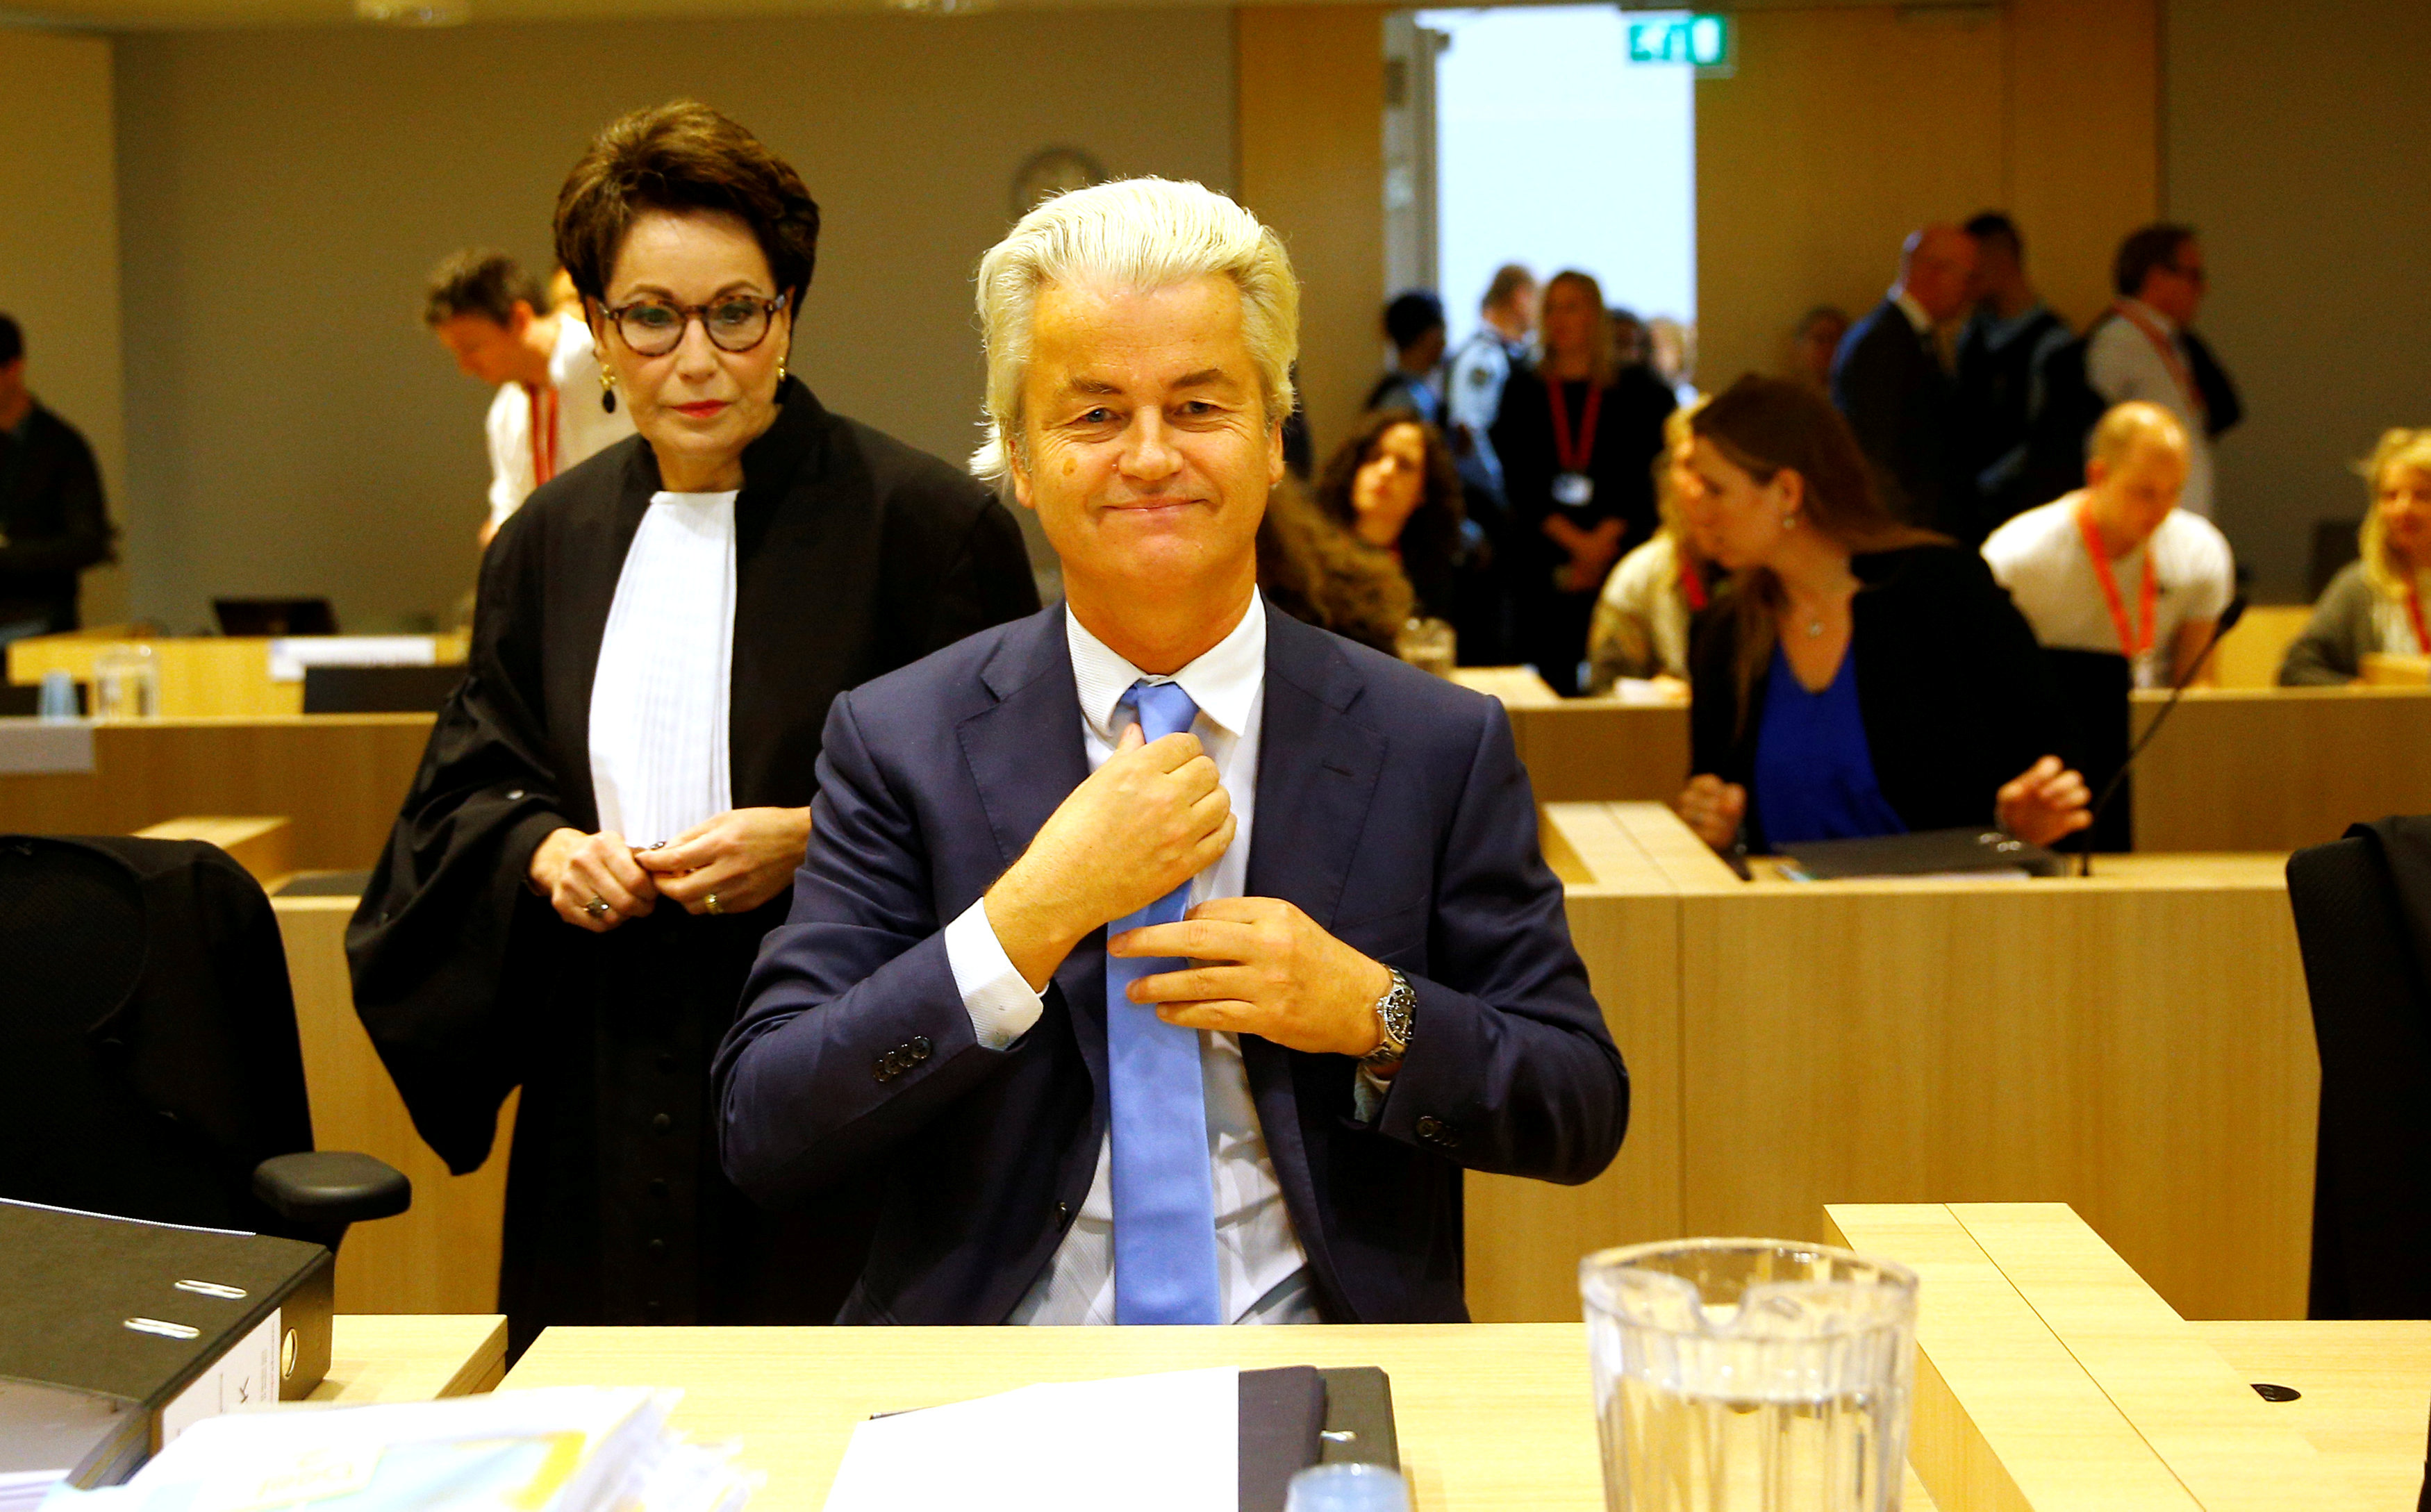 Dutch far-right politician Geert Wilders appeals discrimination verdict